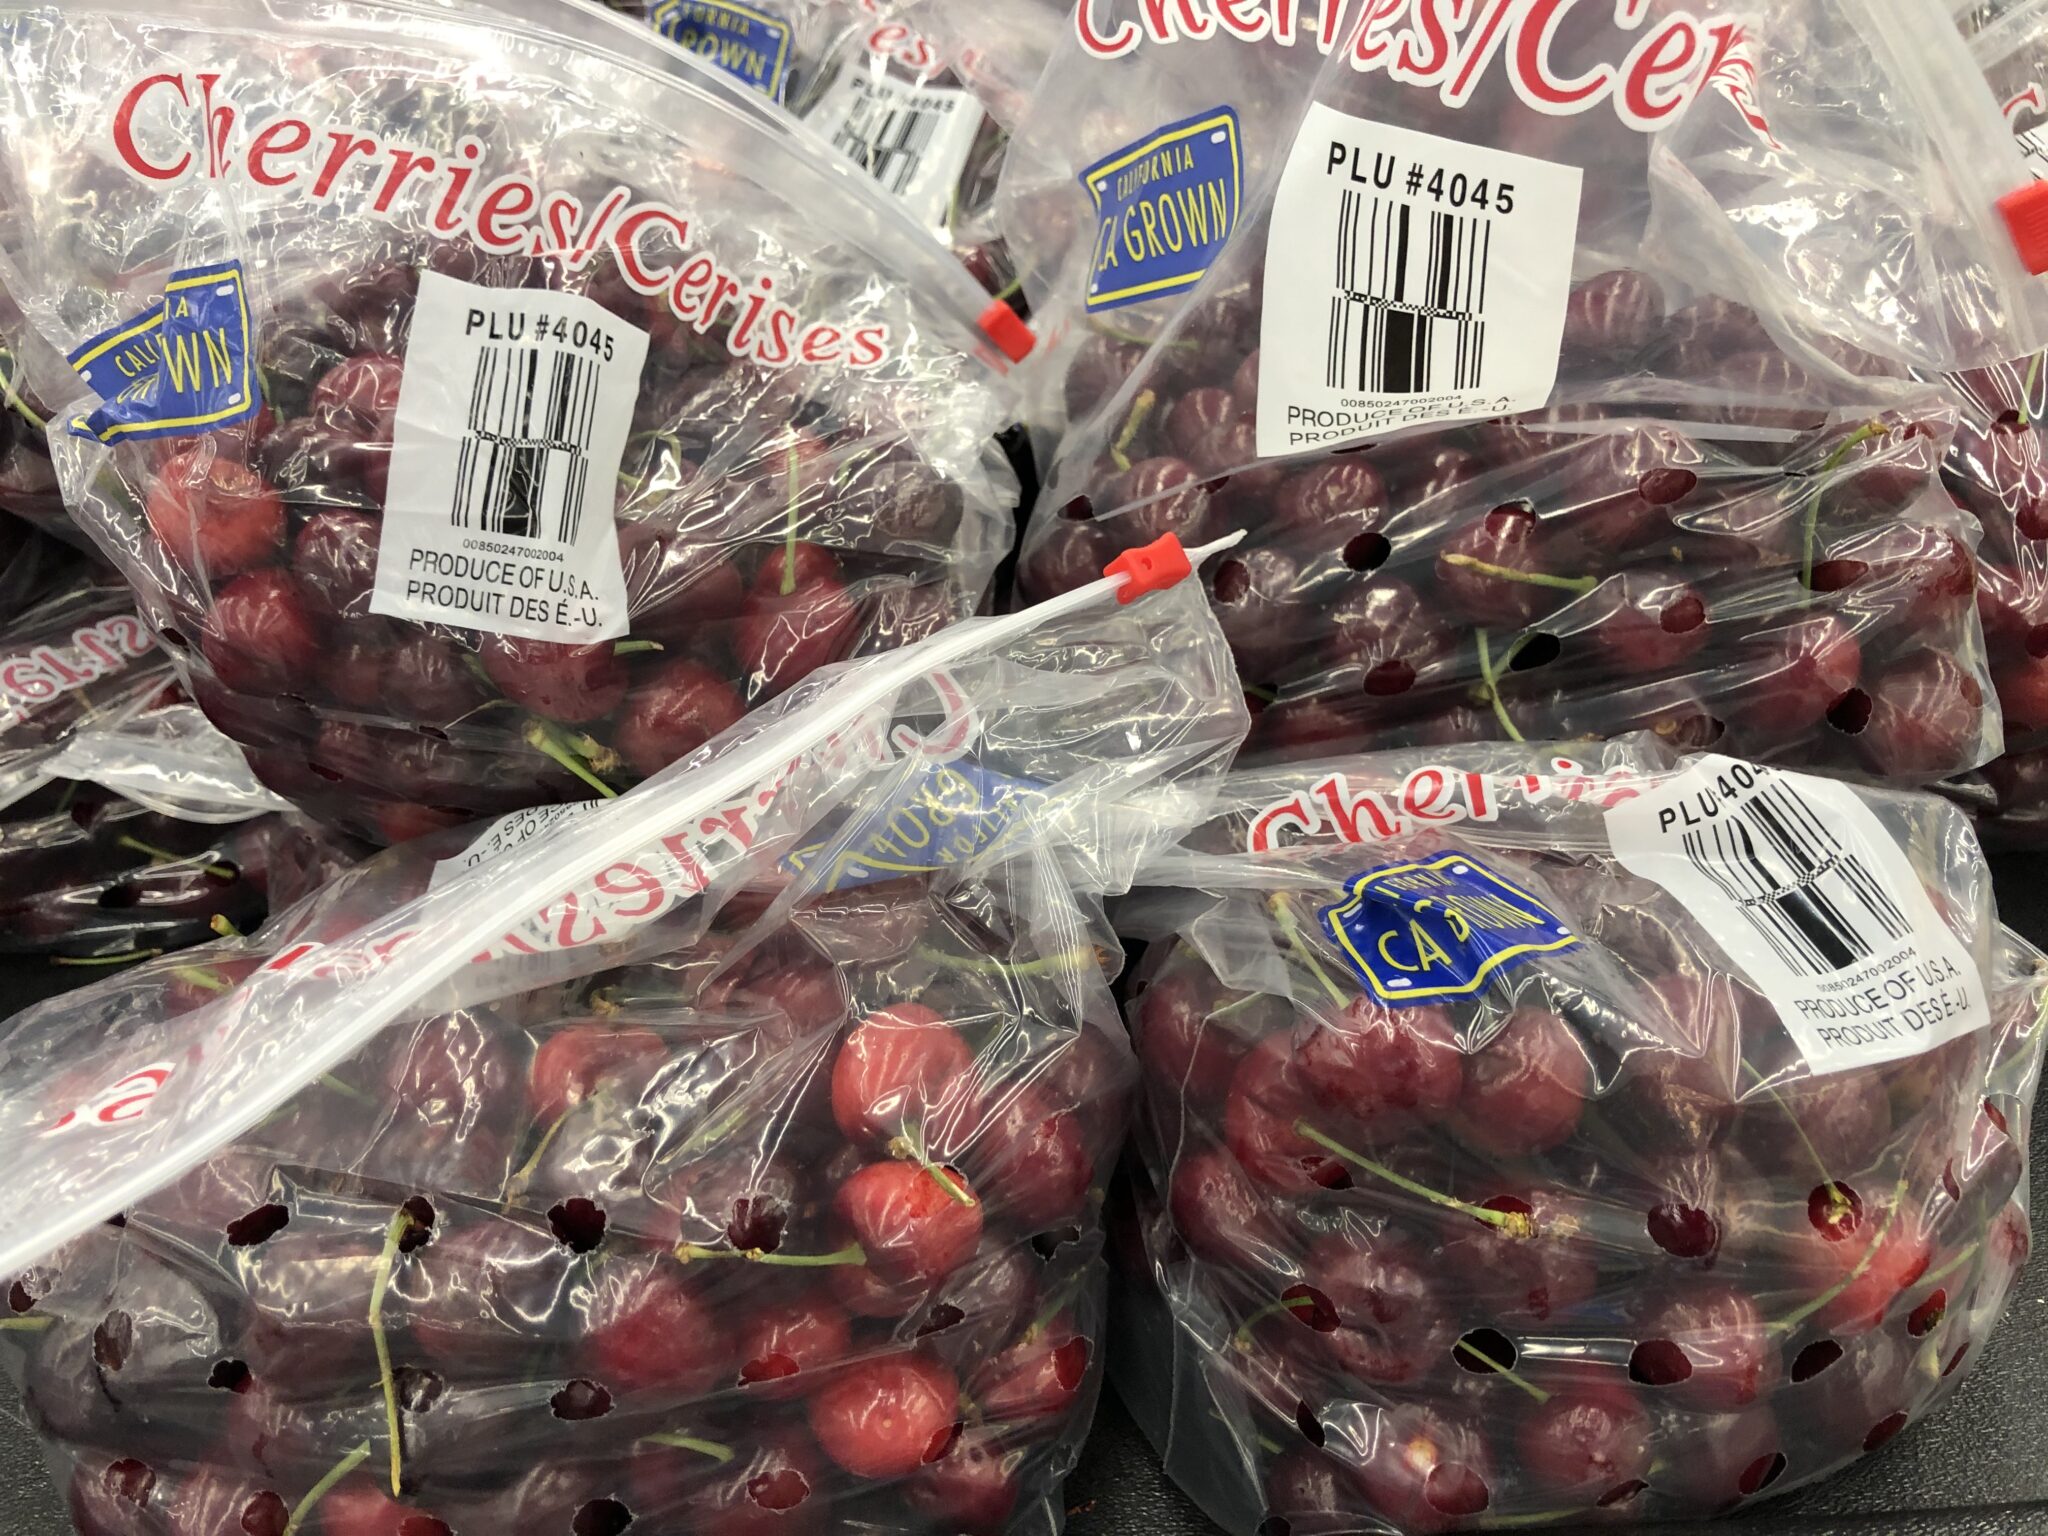 Giant: Fresh Sweet Cherries Just $1.47 Lb Starting 7/2!